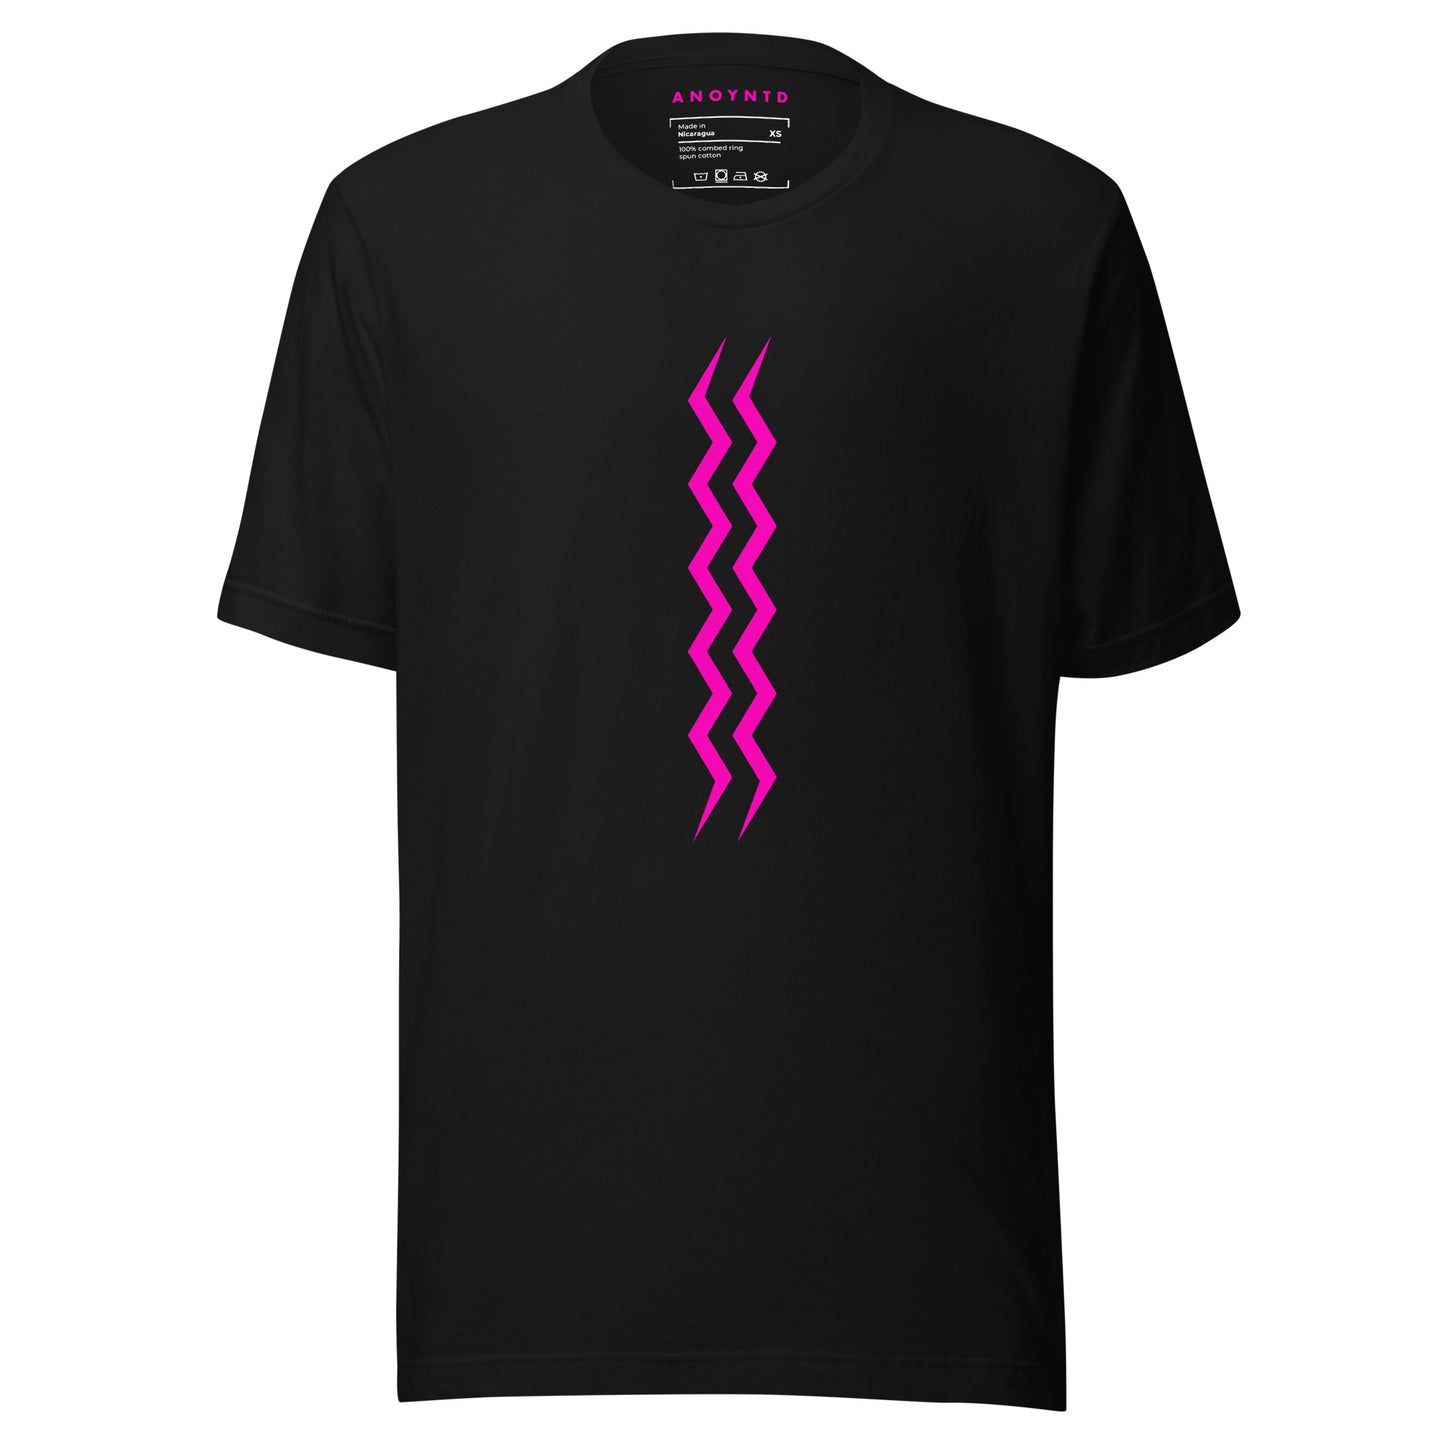 ANOYNTD Vertical Series (Pi) Unisex t-shirt